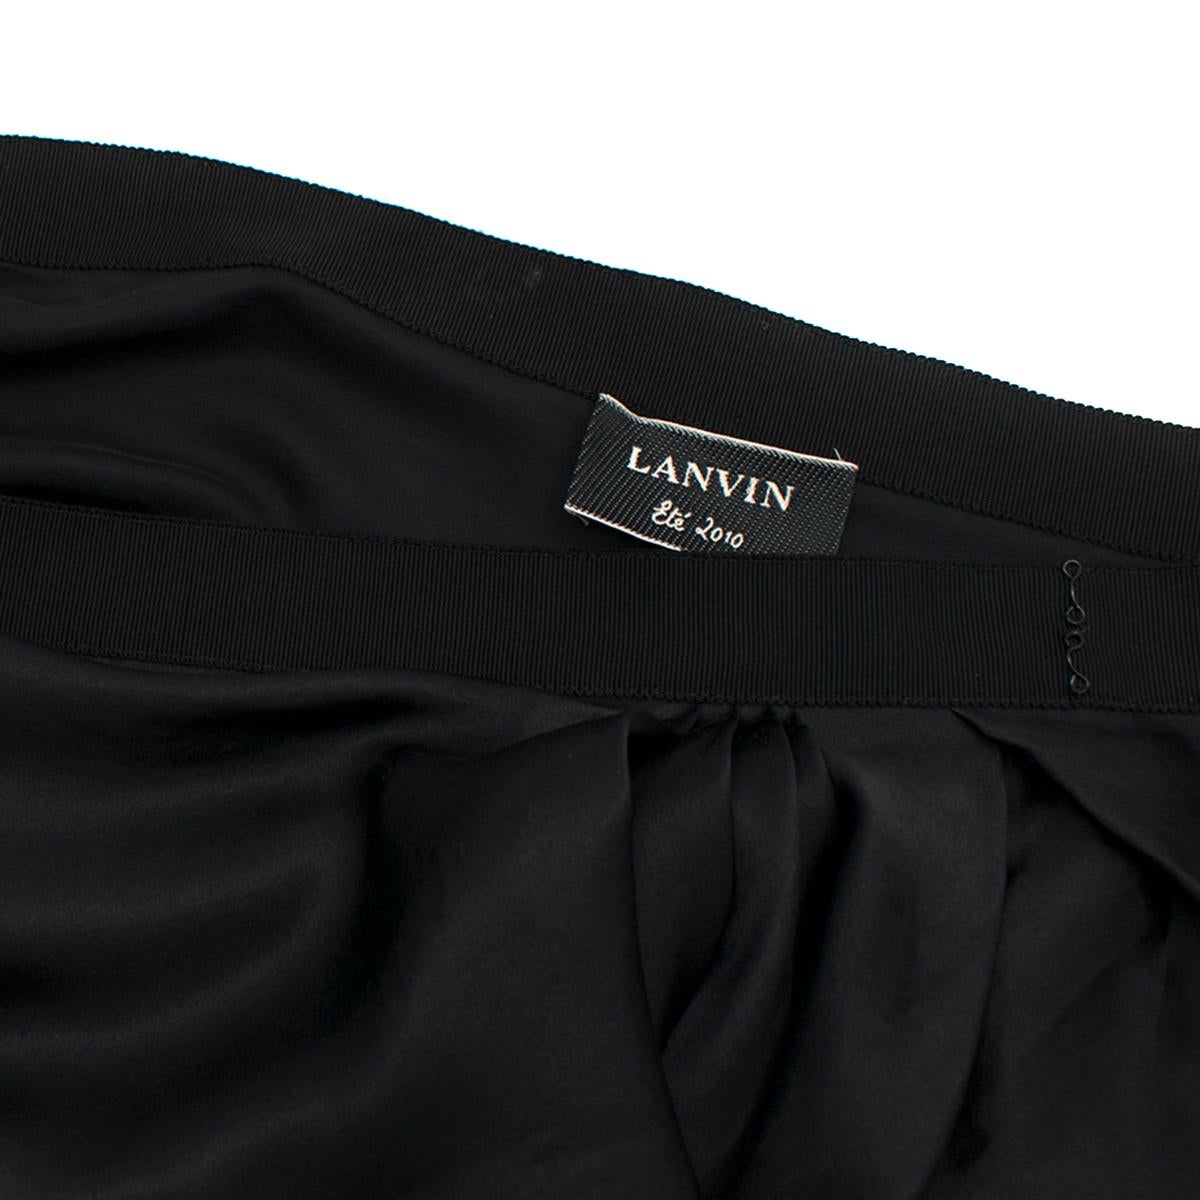 black silk wrap skirt